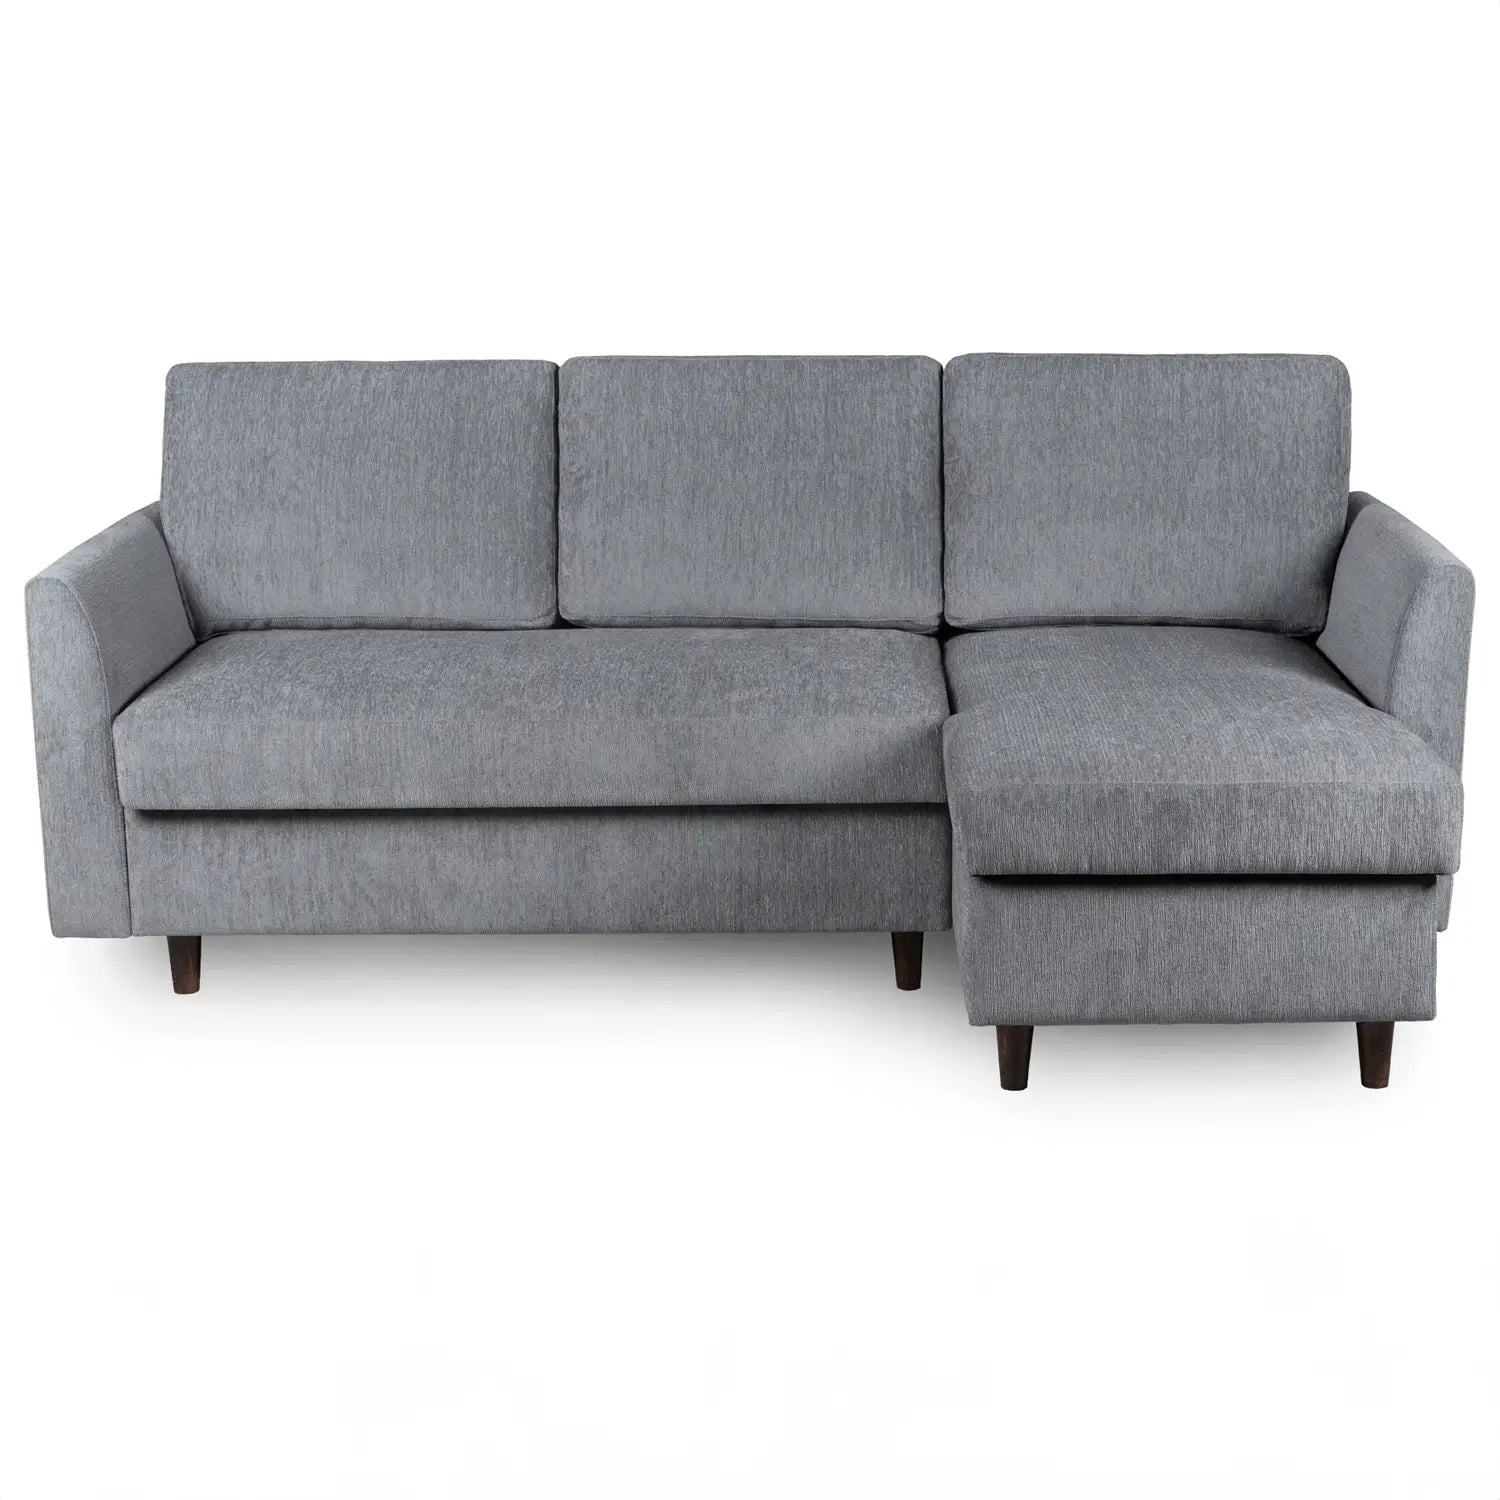 Metis Grey Textured Weave Fabric Upholstered Corner Sofa Bed